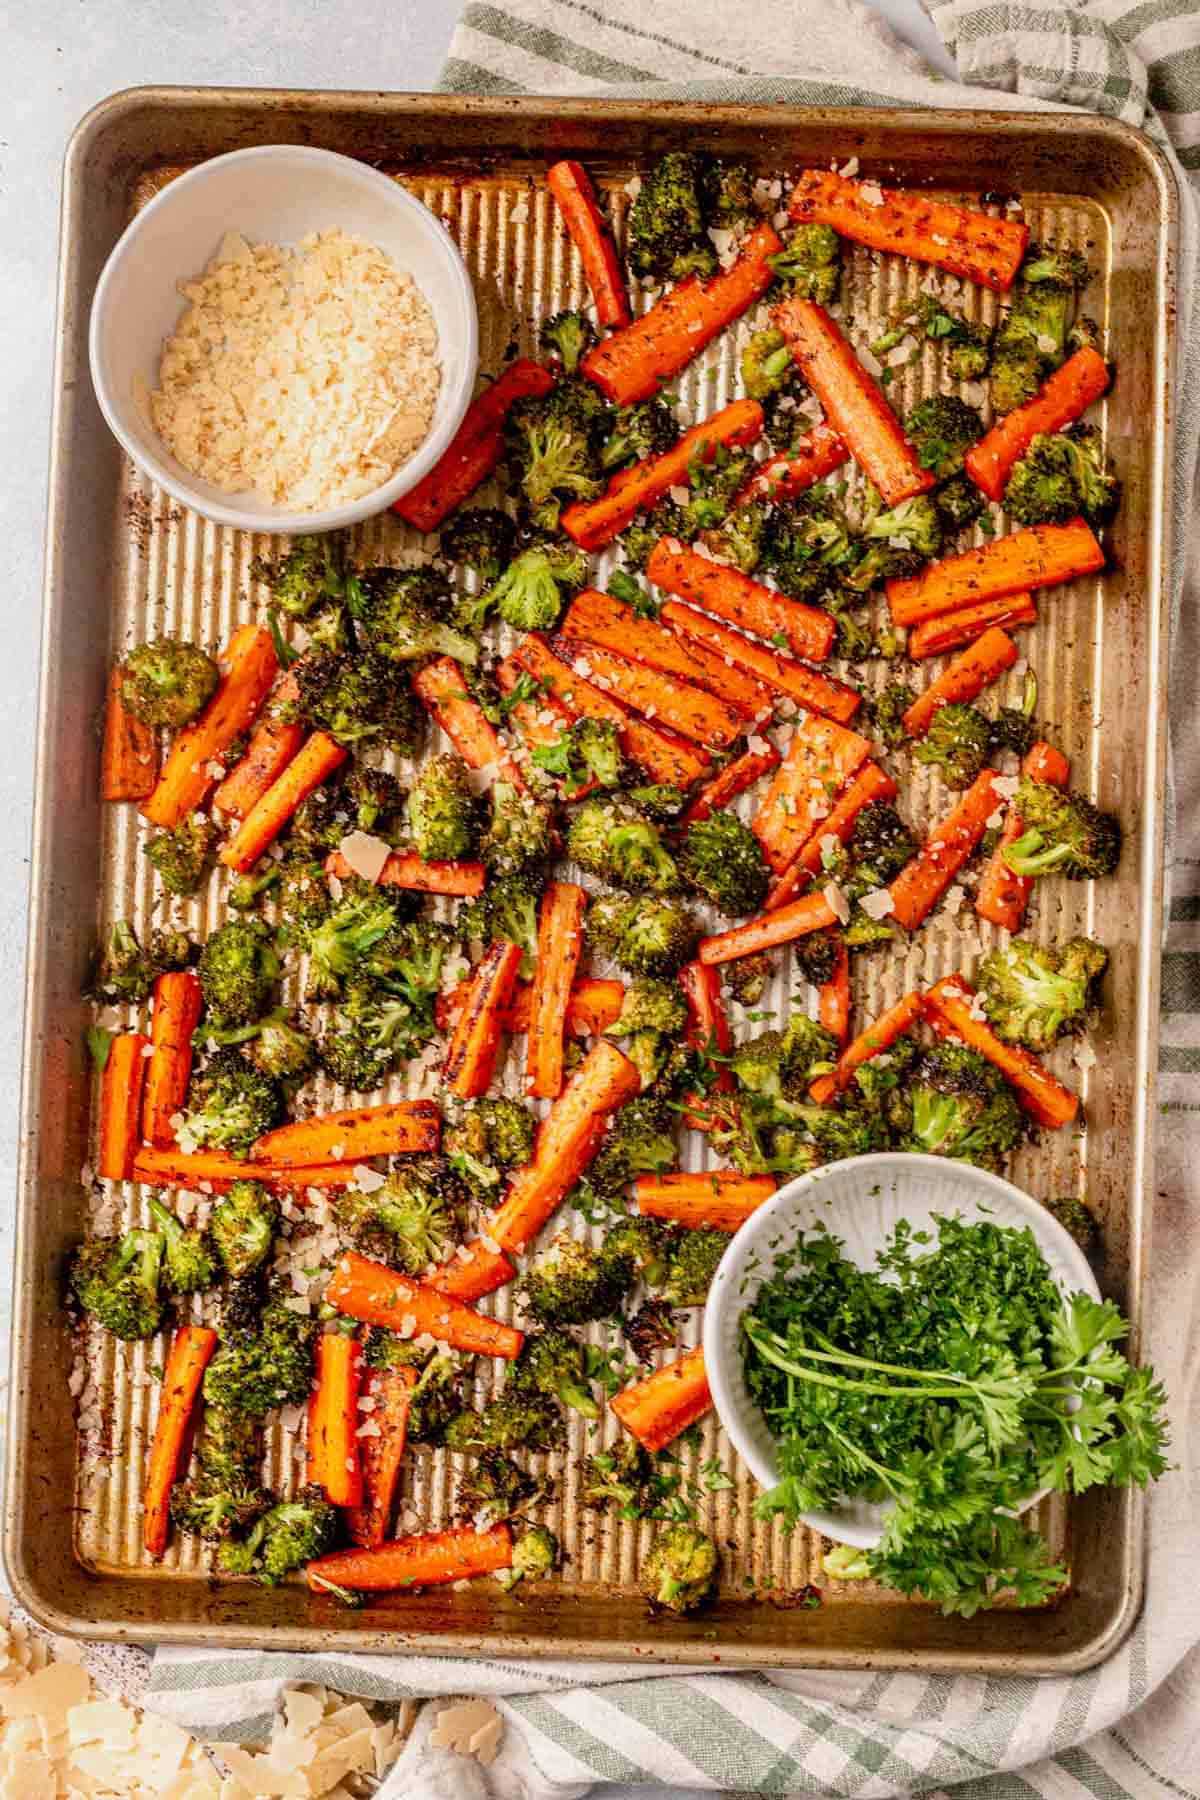 roasted broccoli and carrots ono a baking sheet